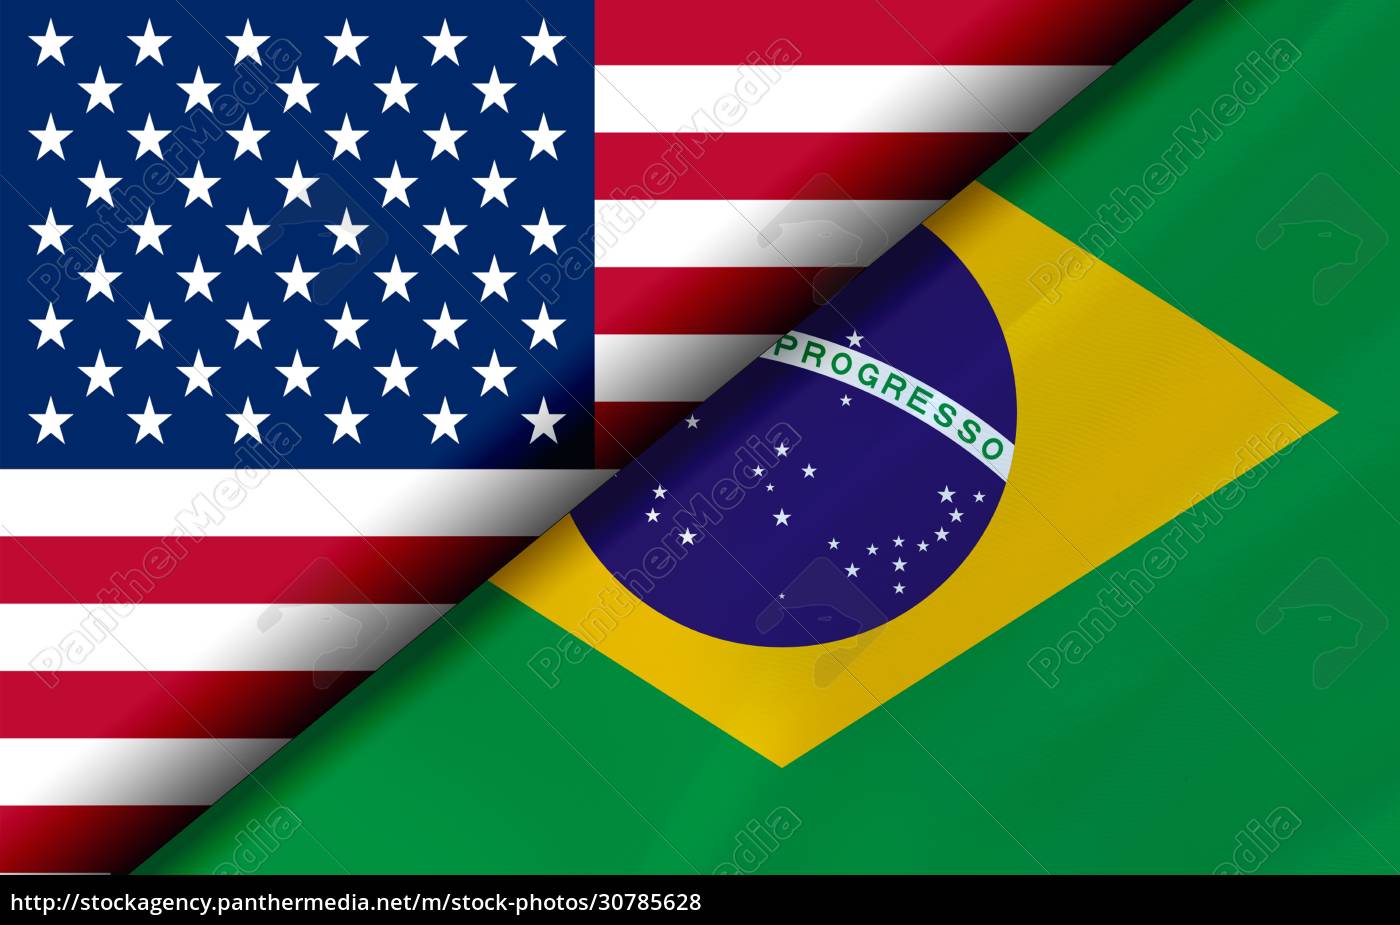 https://mh-1-agencia-estoque.panthermedia.net/media/previews/0030000000/30785000/~bandeiras-dos-eua-e-do-brasil_30785628_high.jpg